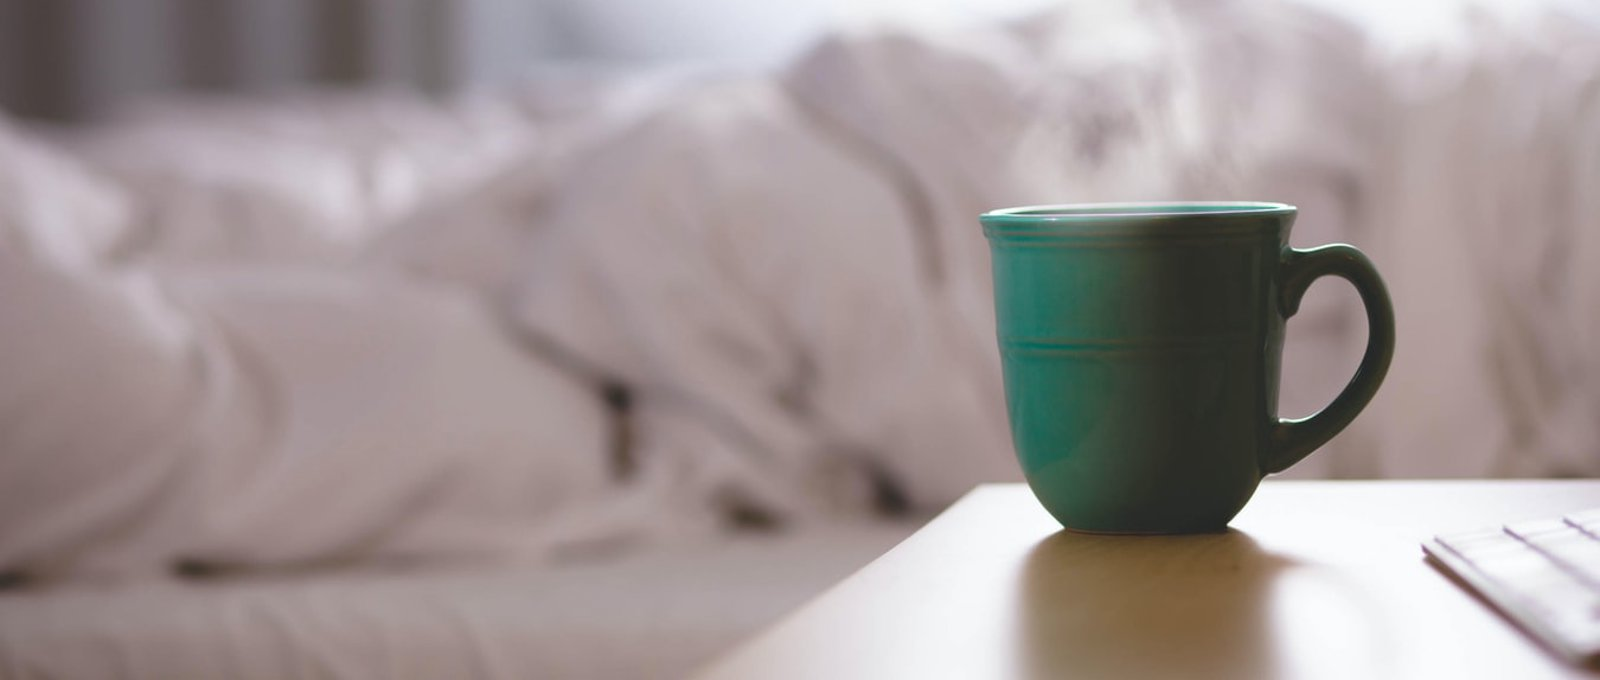 A steaming green mug